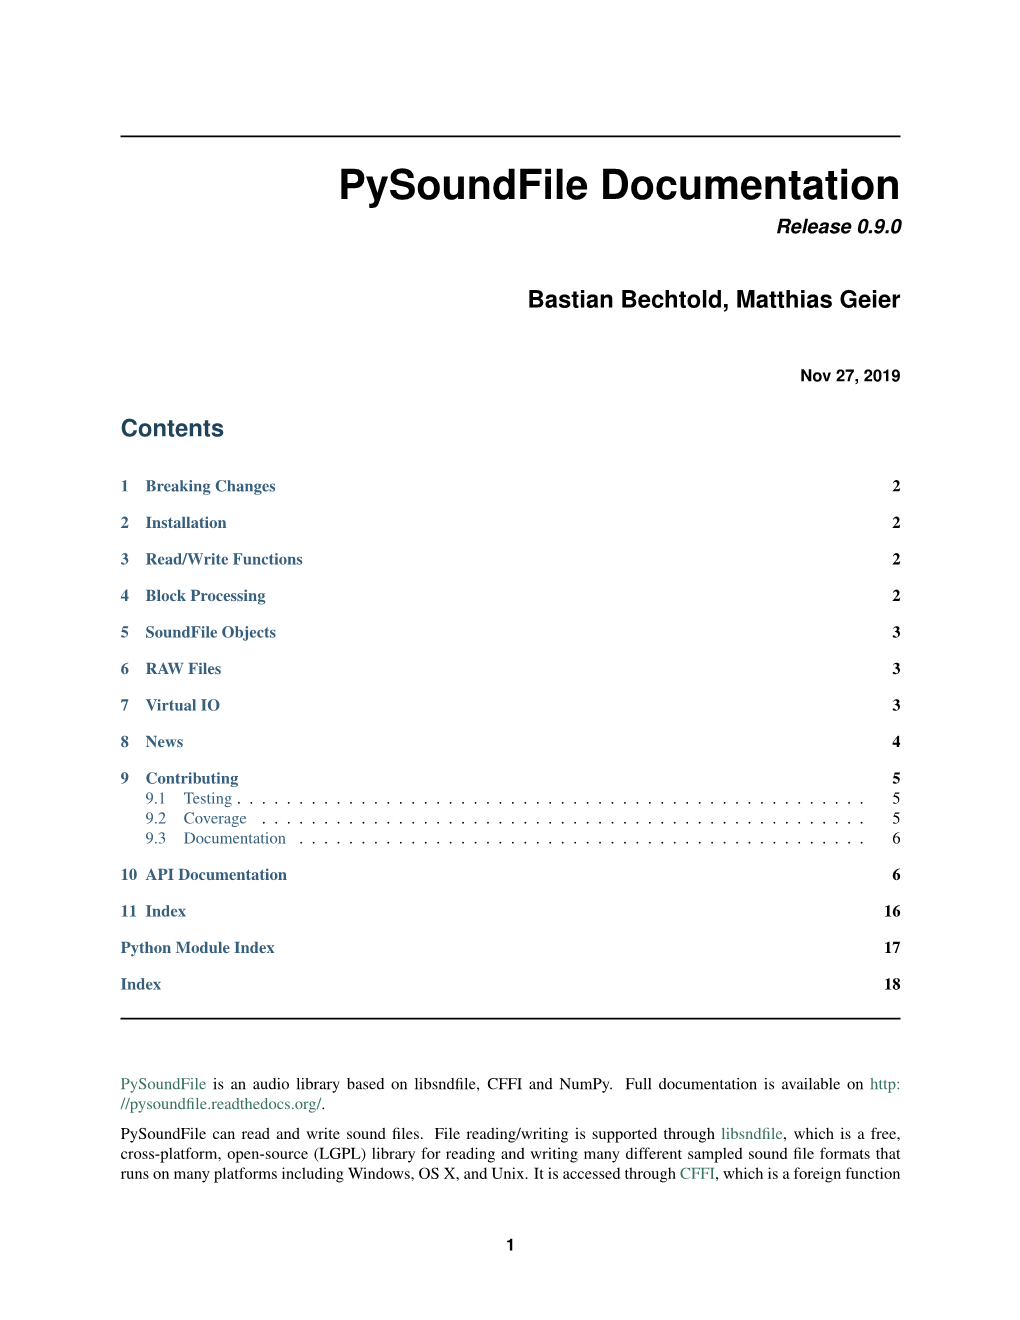 Pysoundfile Documentation Release 0.9.0